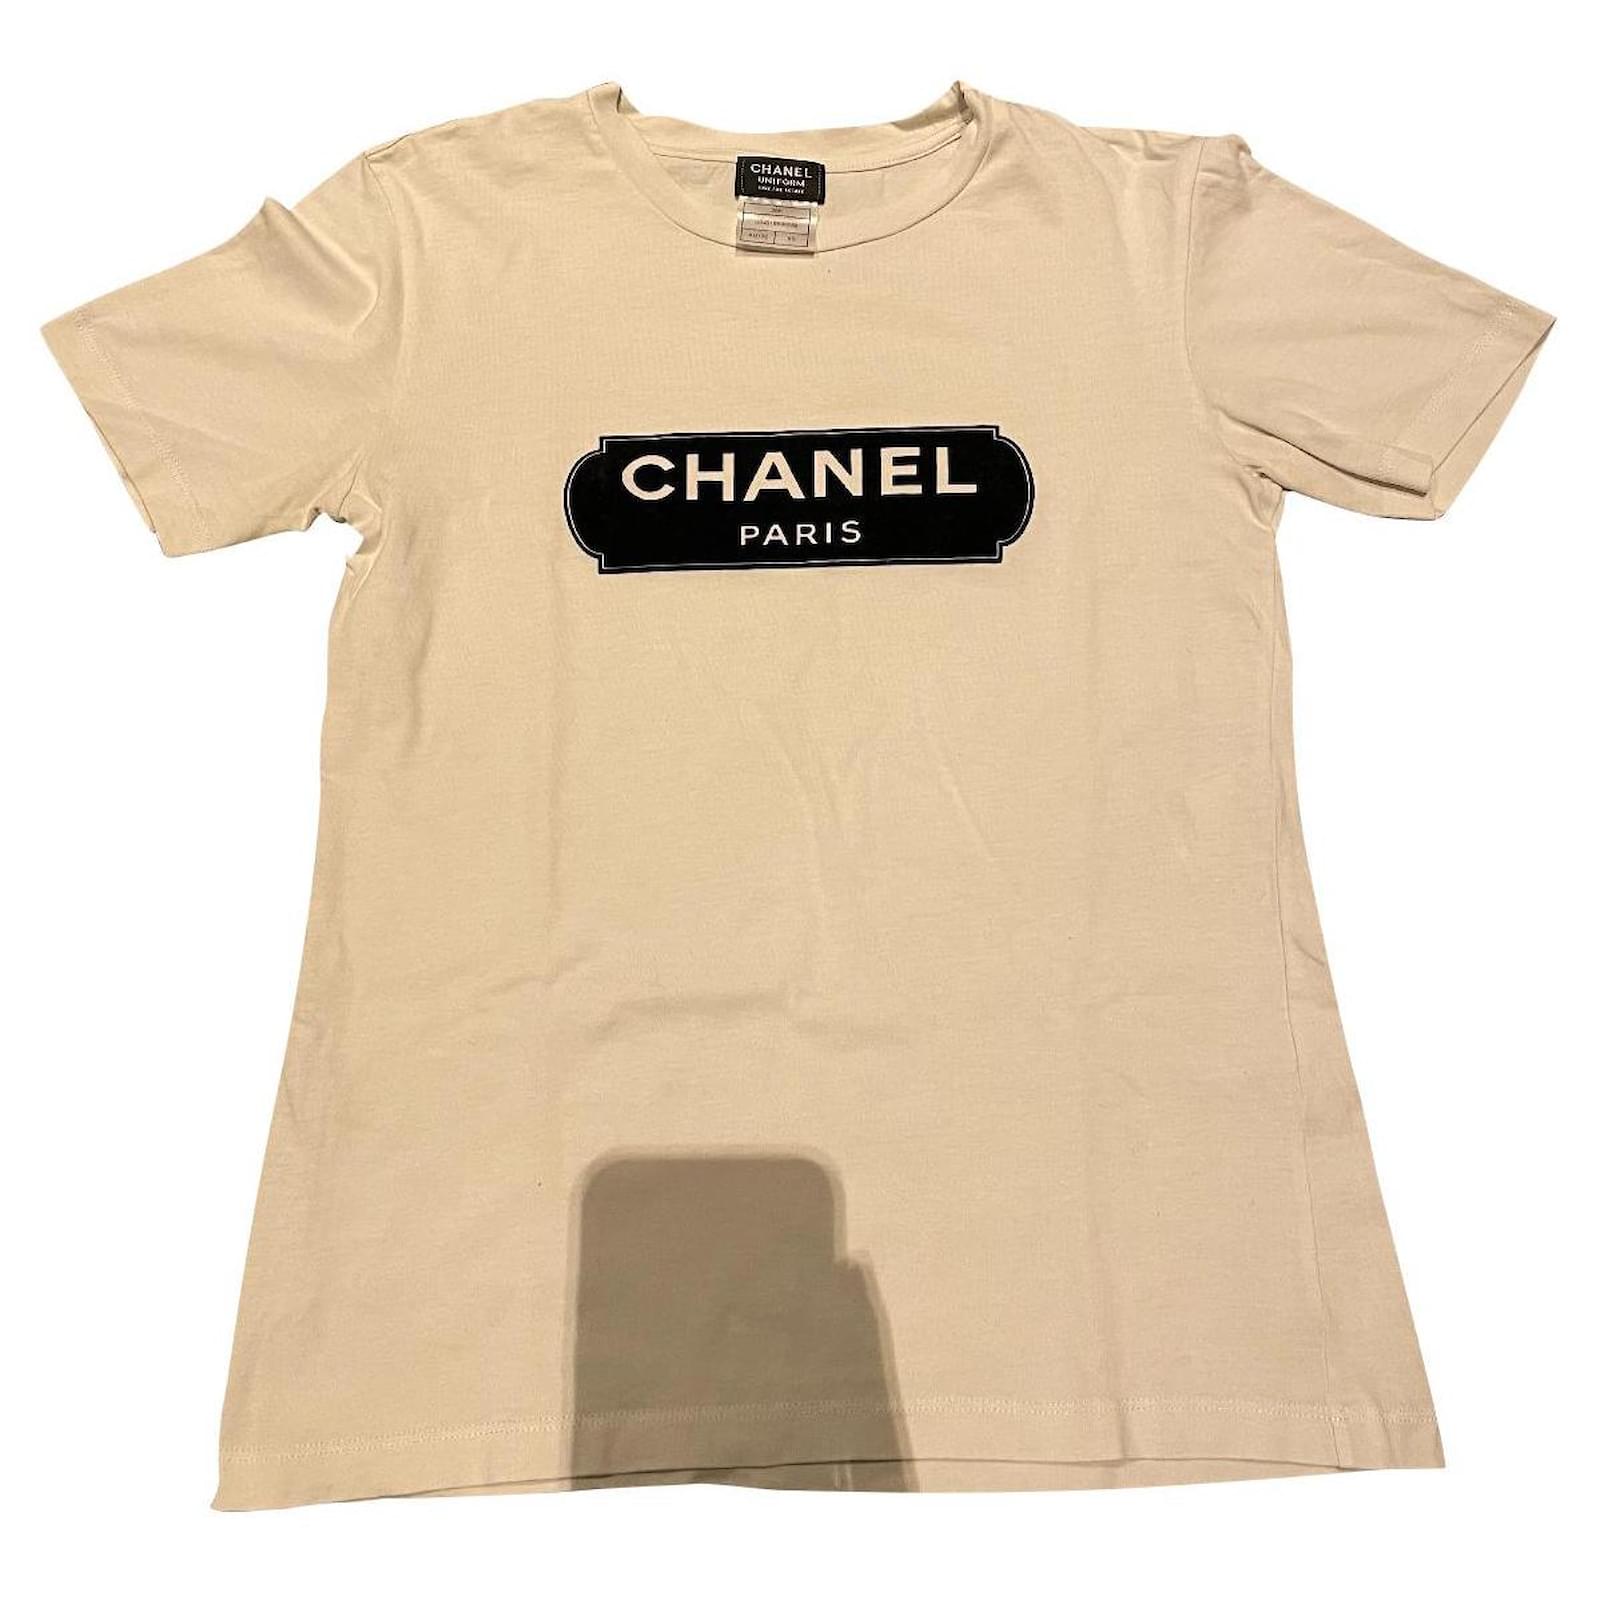 Chanel t-shirt